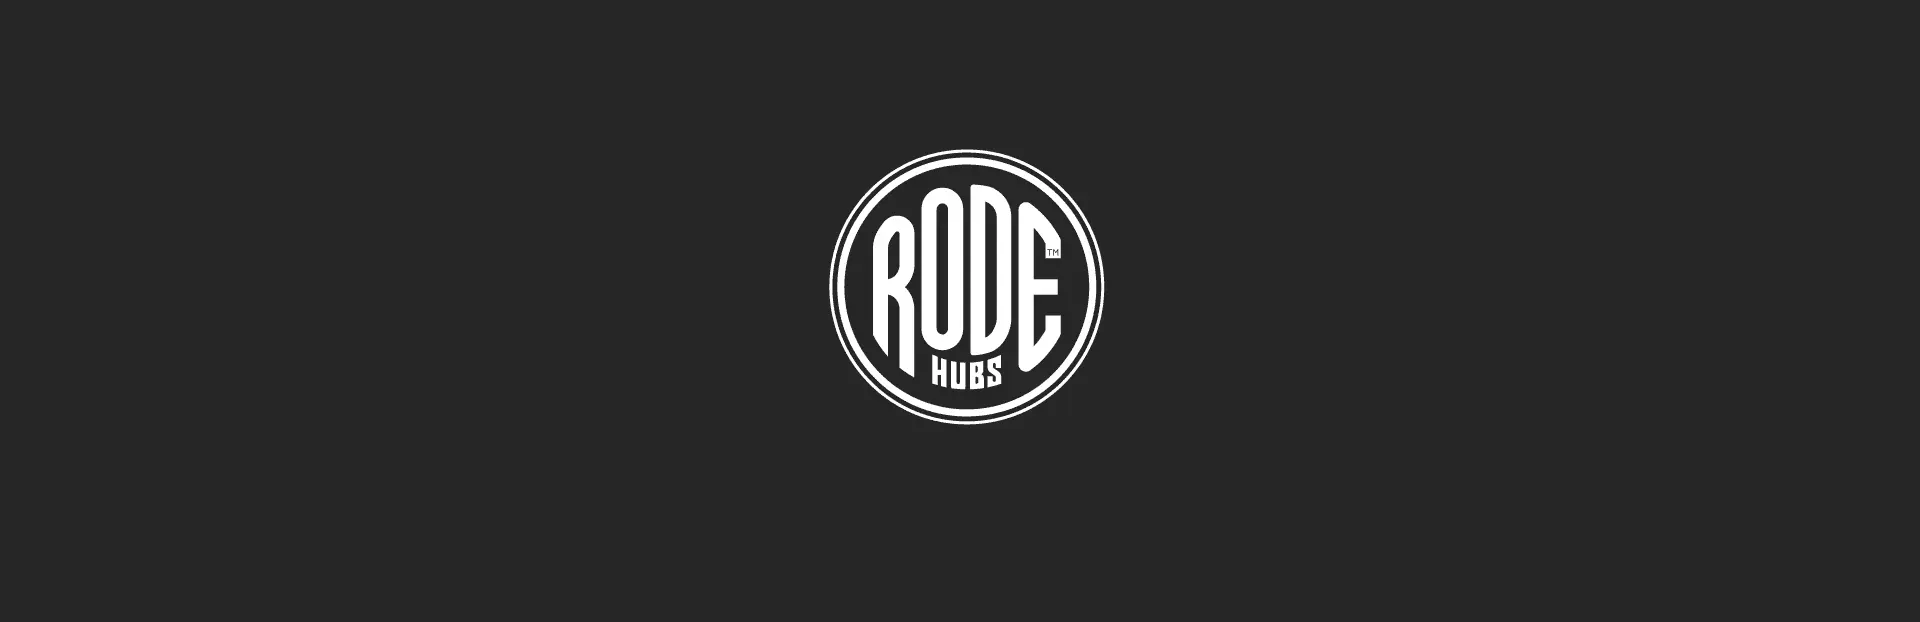 Rode Hub